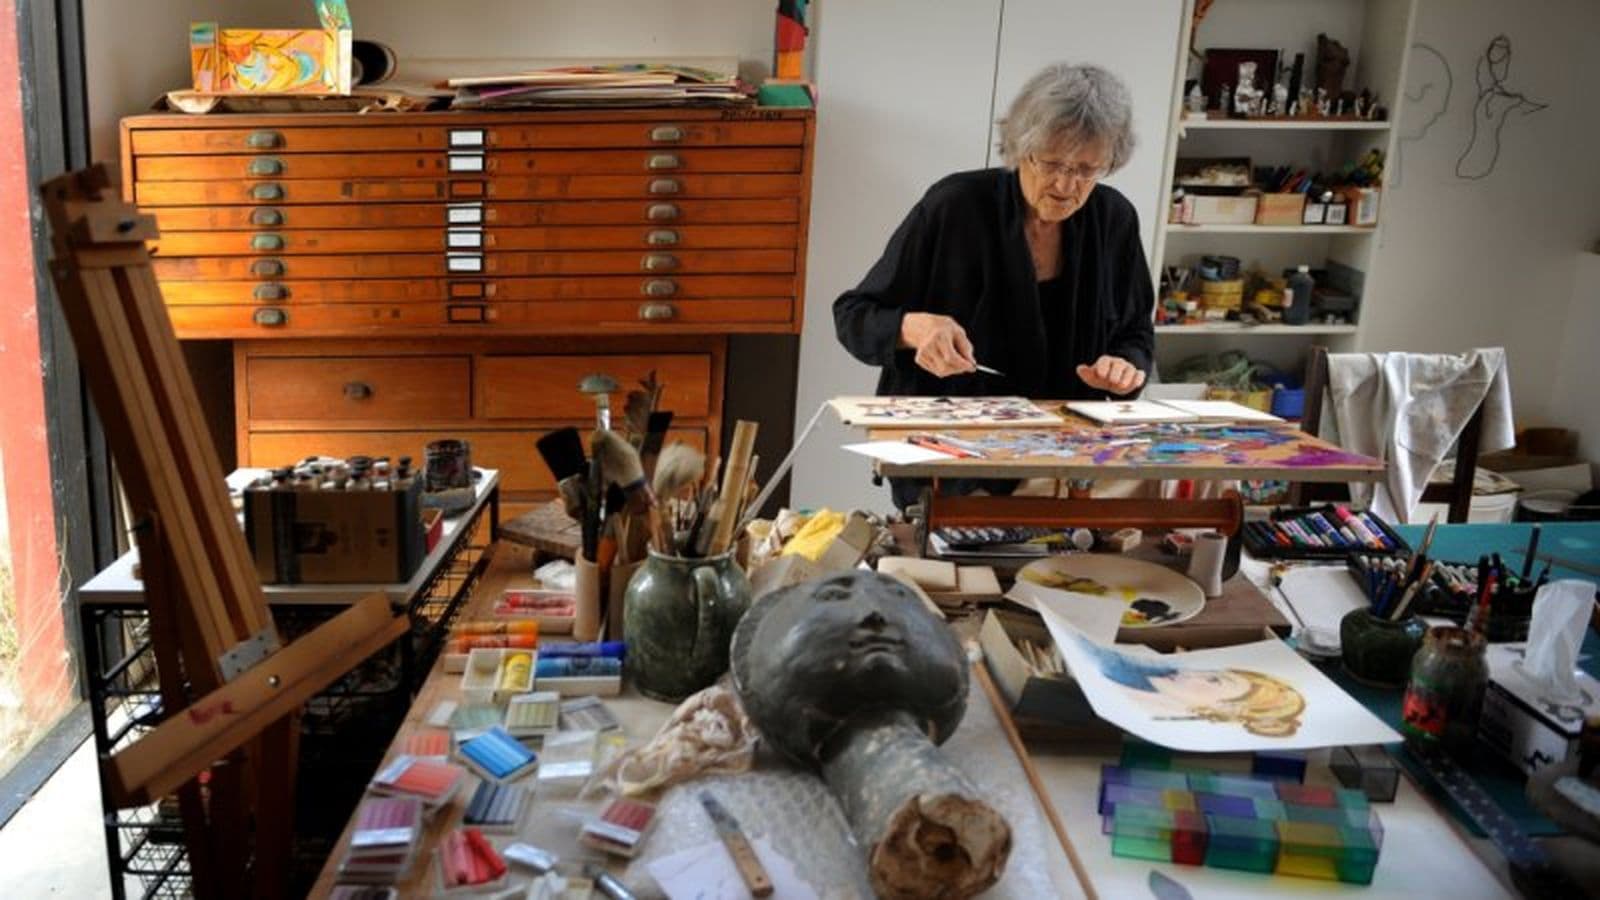 Photograph of woman in artist's studio